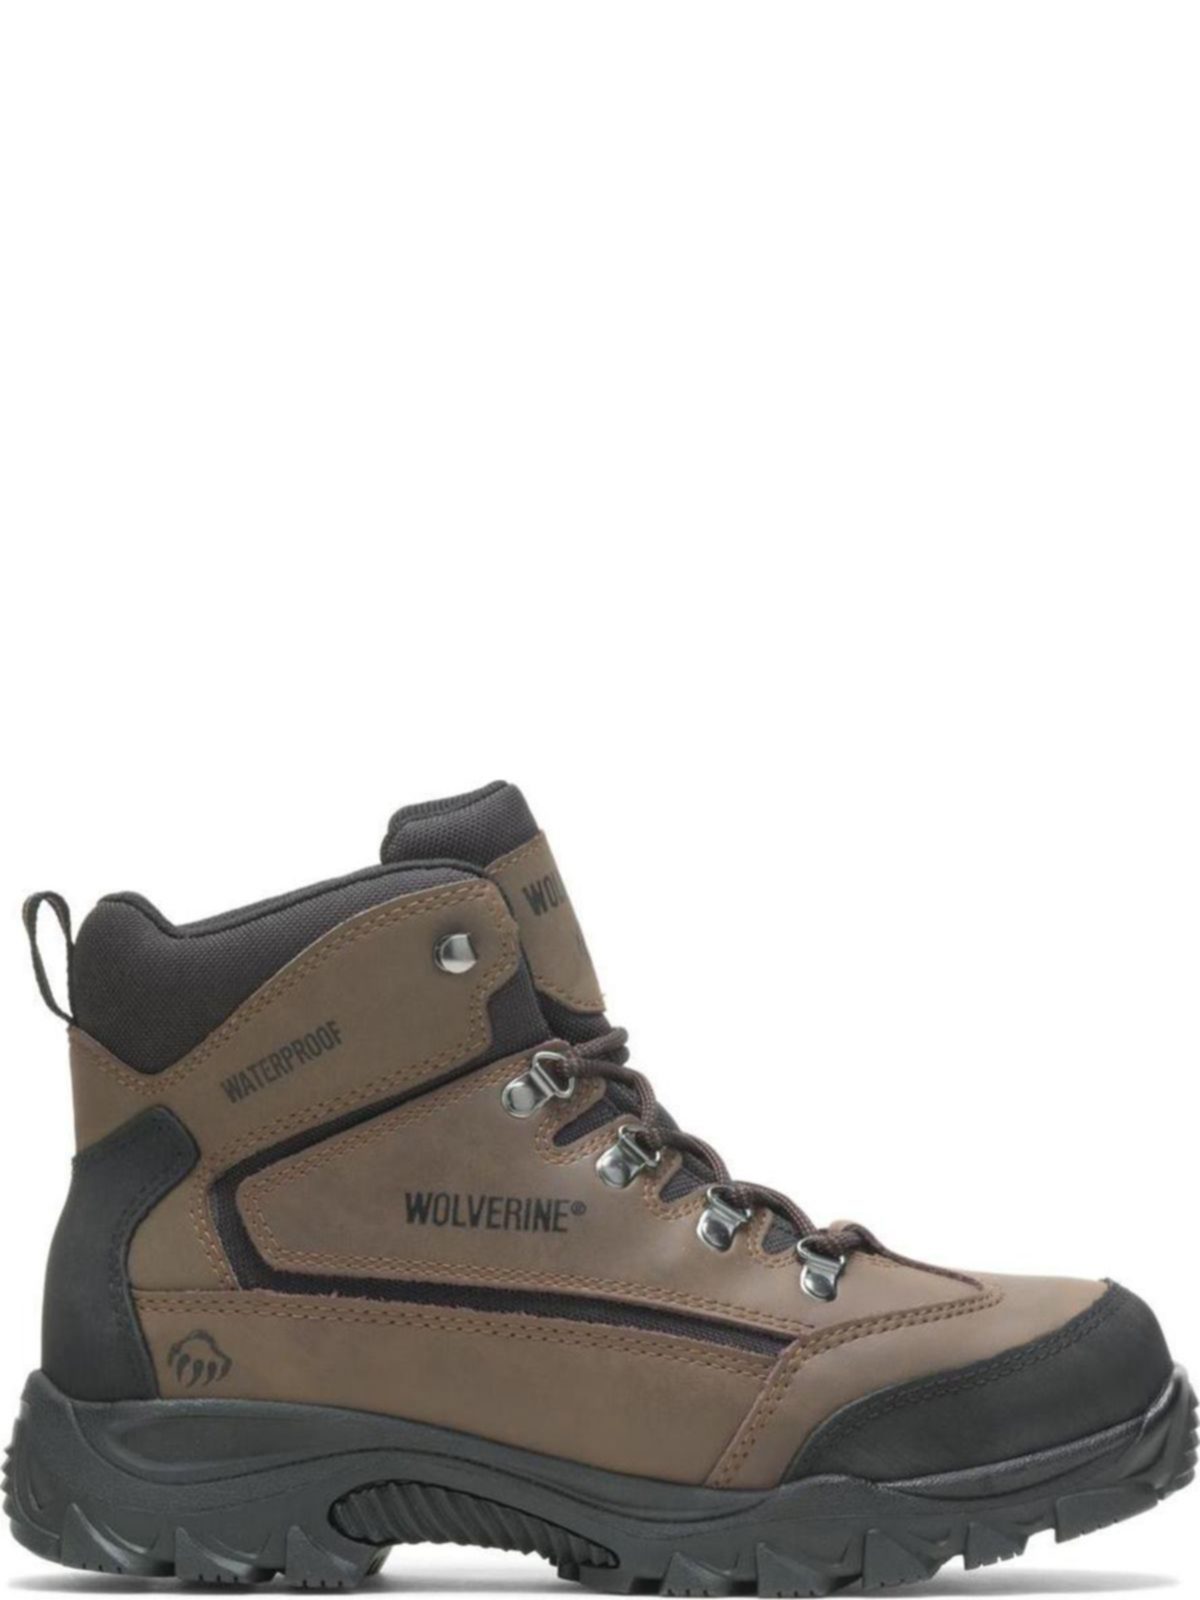 wolverine men's w513 spencer boot